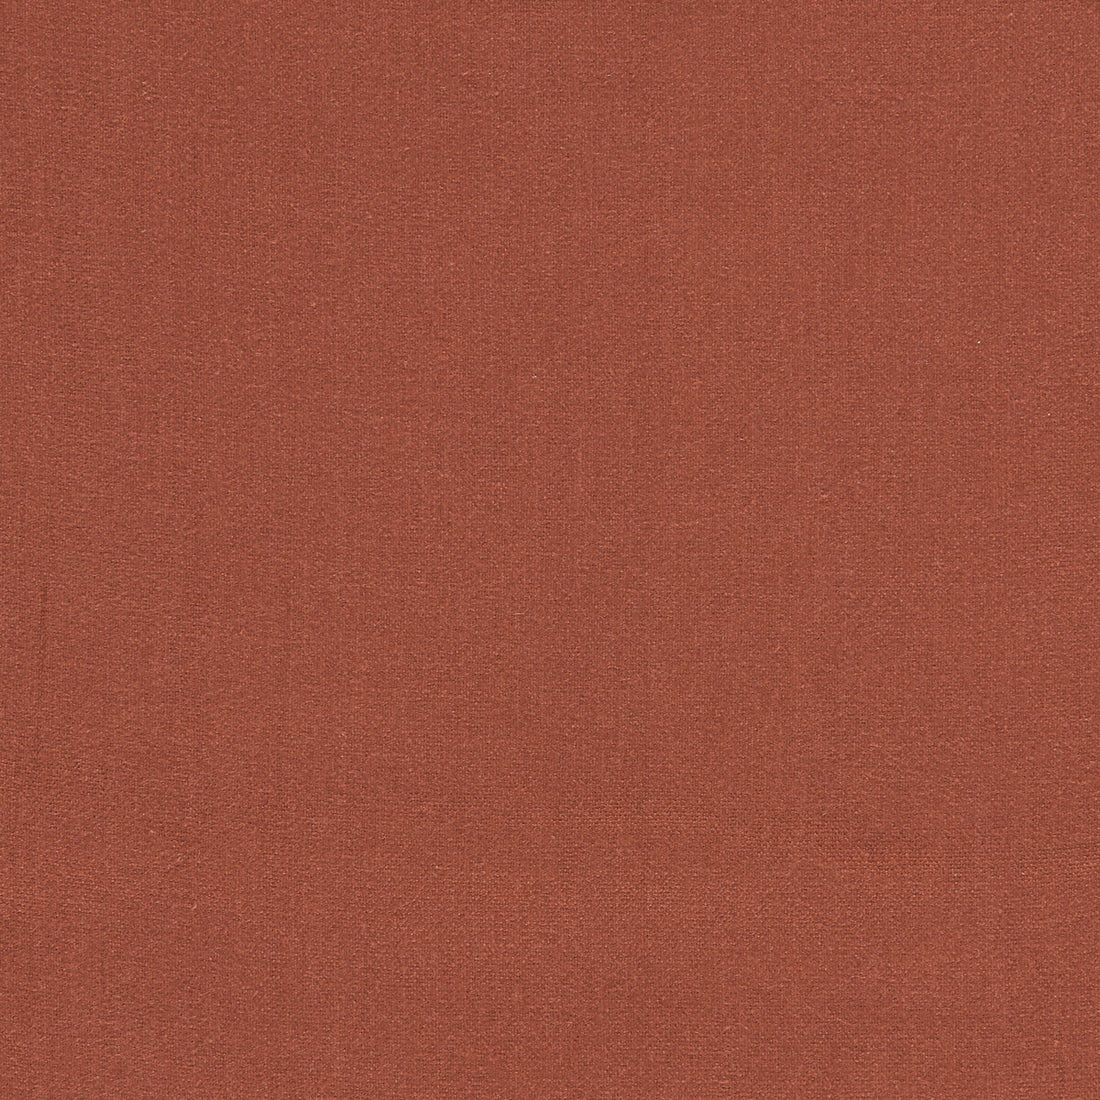 Lazio fabric in spice color - pattern F1537/28.CAC.0 - by Clarke And Clarke in the Clarke &amp; Clarke Lazio collection